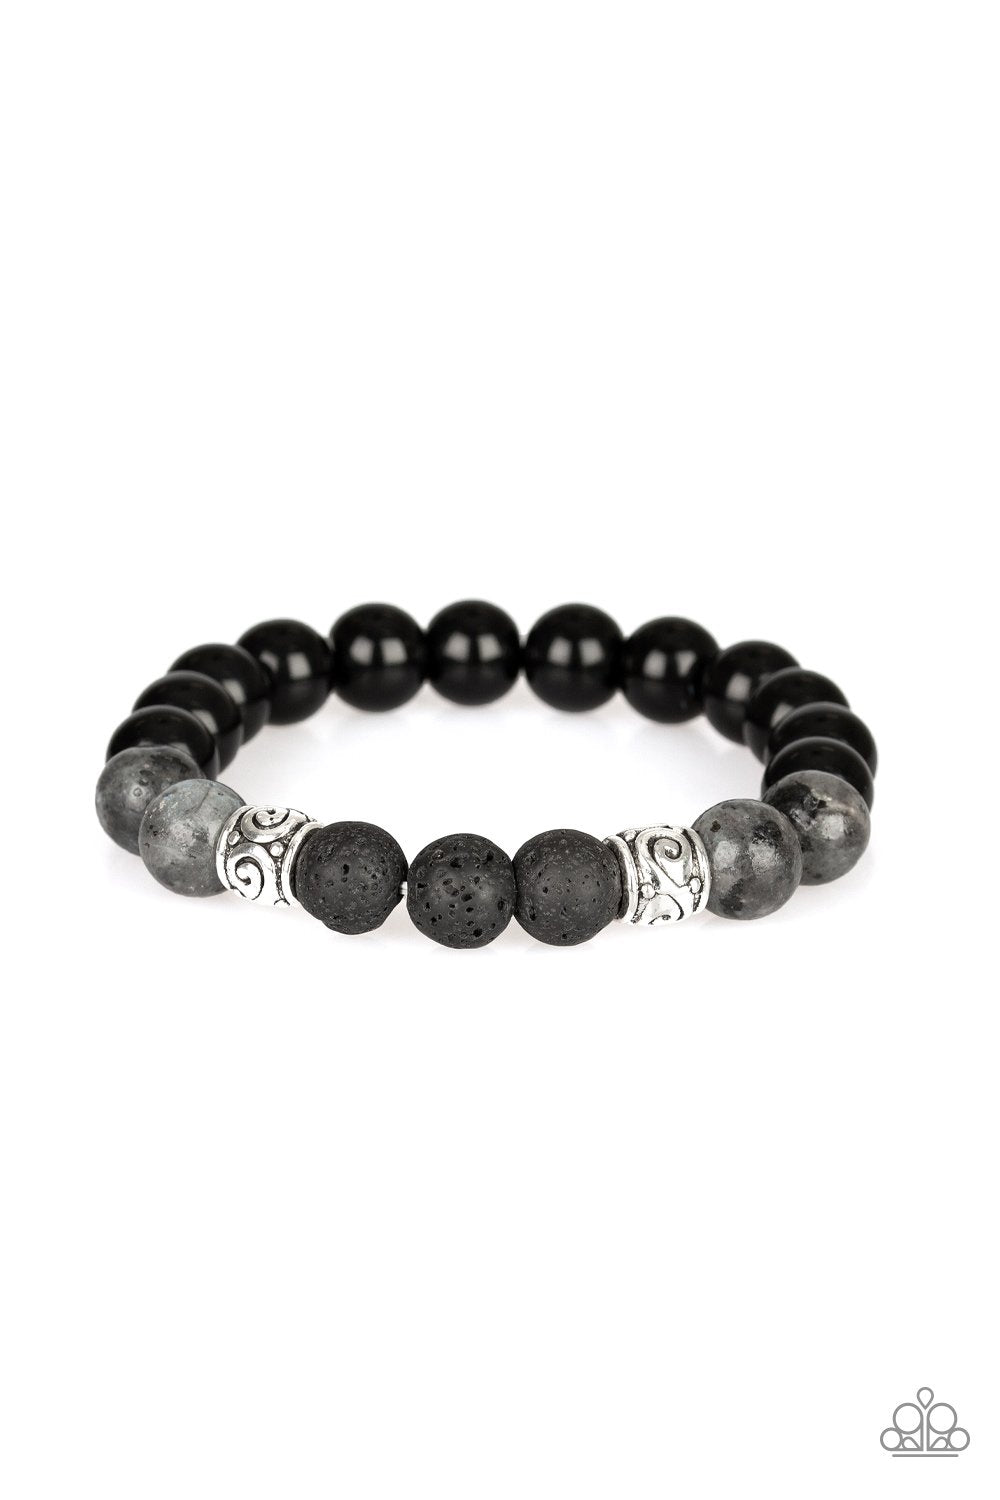 Mantra Black Stone, Bead and Lava Rock Bracelet - Paparazzi Accessories-CarasShop.com - $5 Jewelry by Cara Jewels